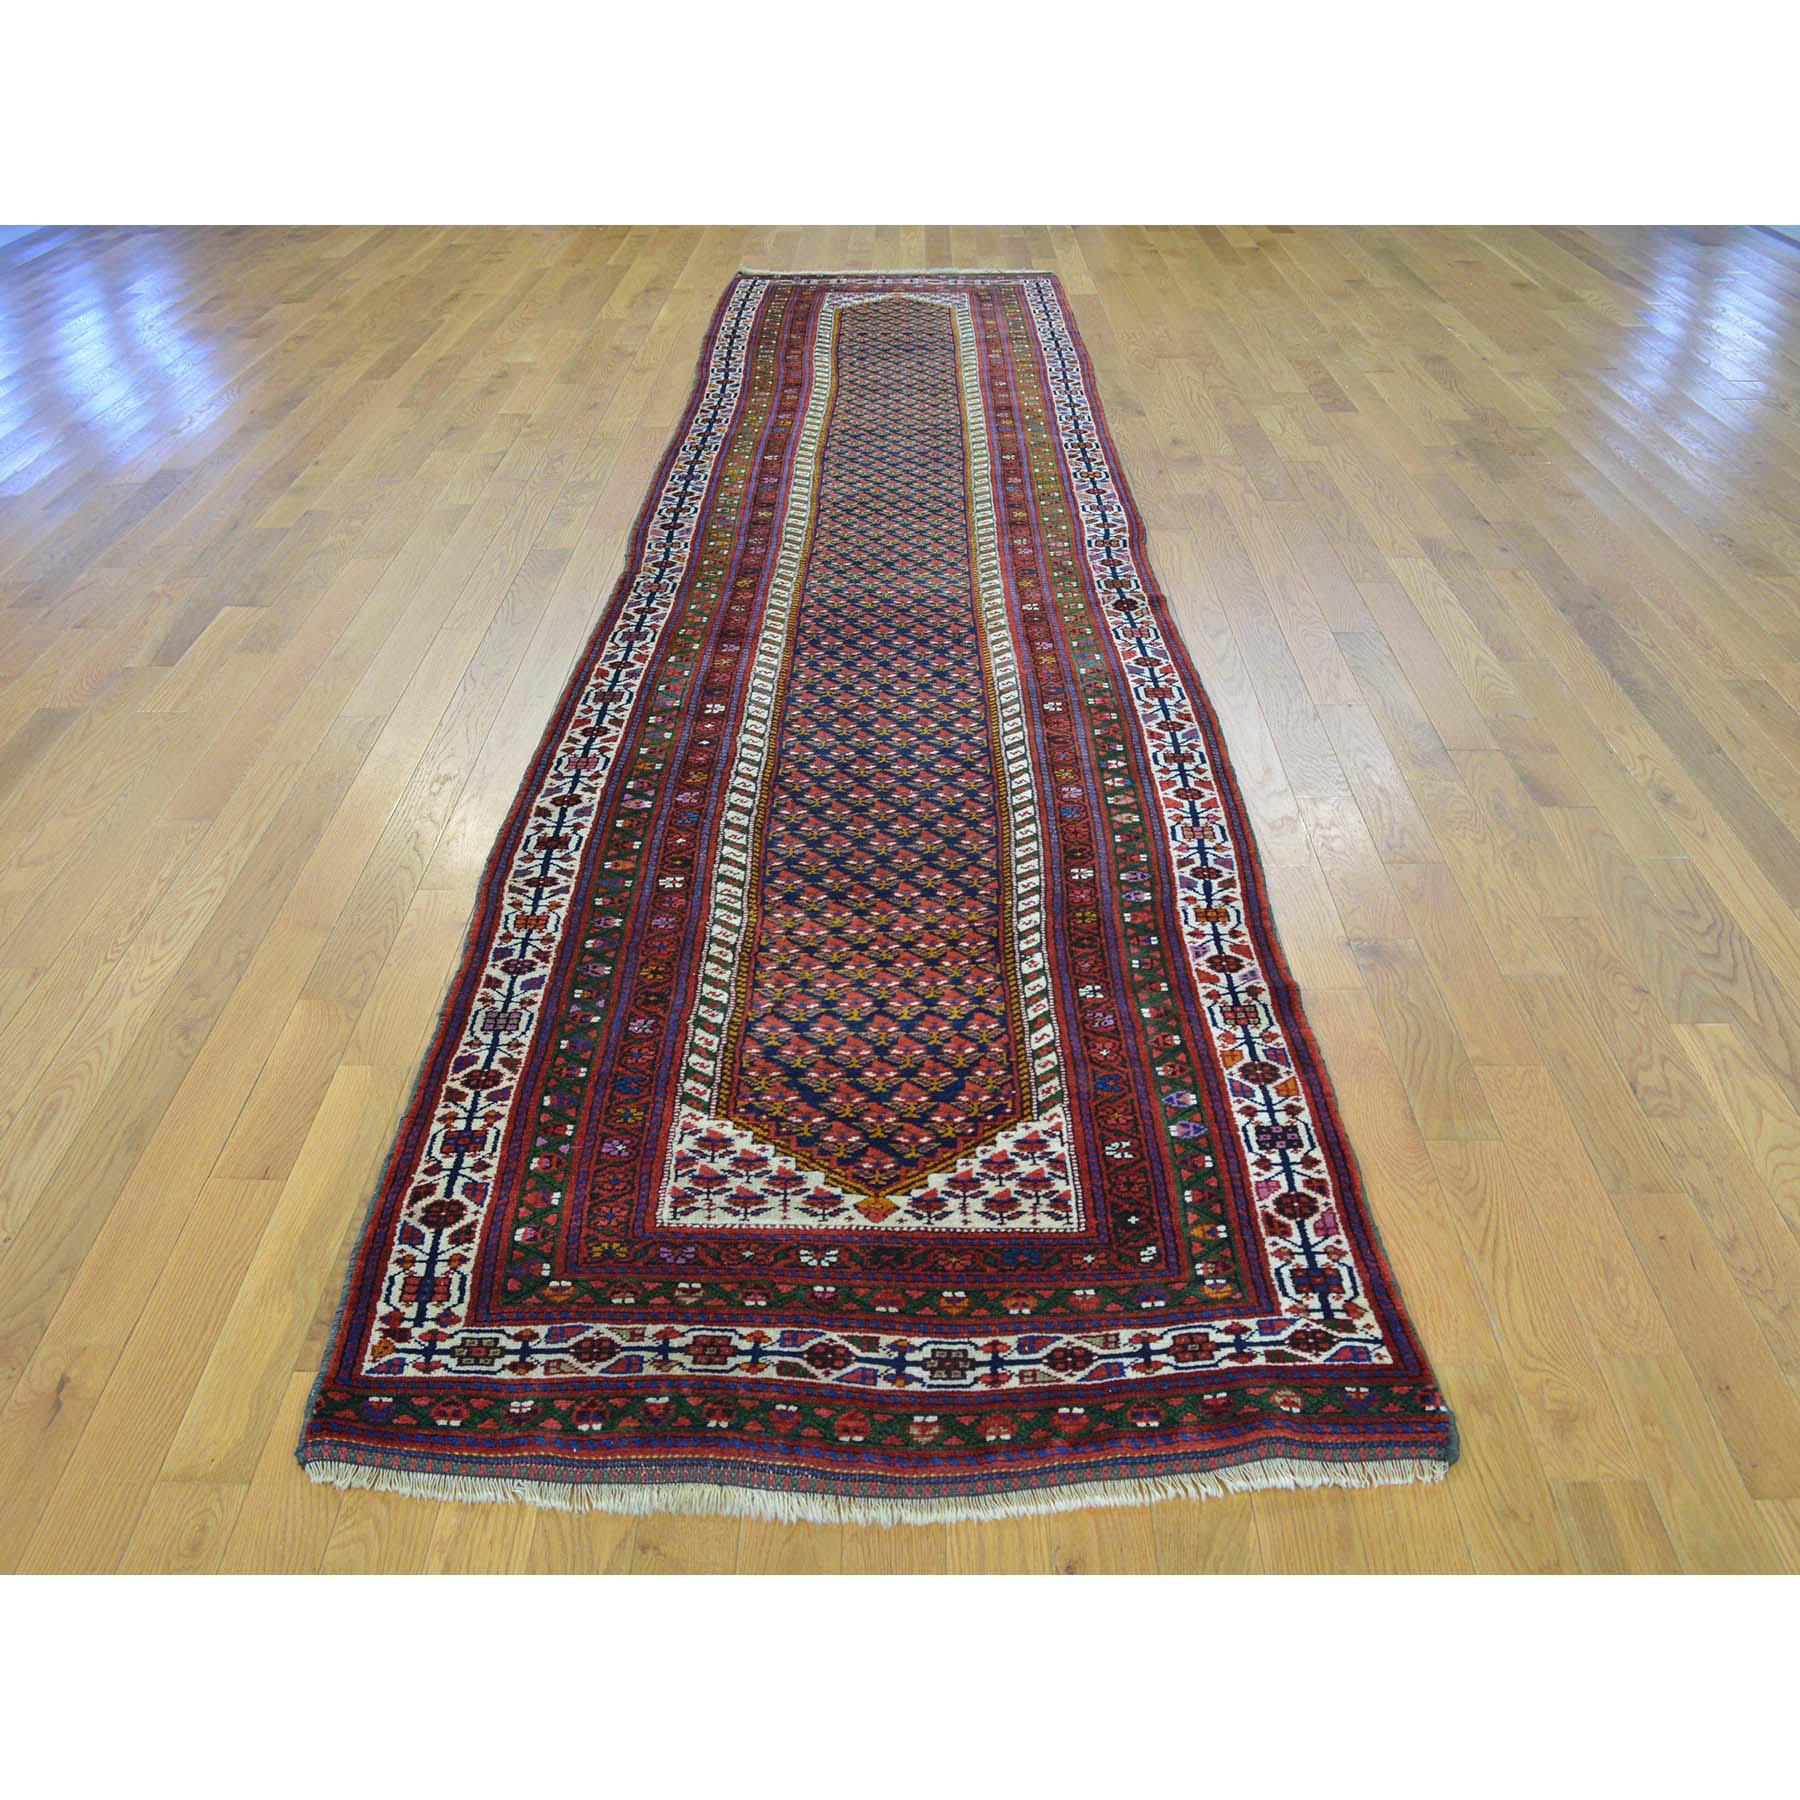 Antique Persian Northwest Boteh design runner handmade rug. Measures: 3'2